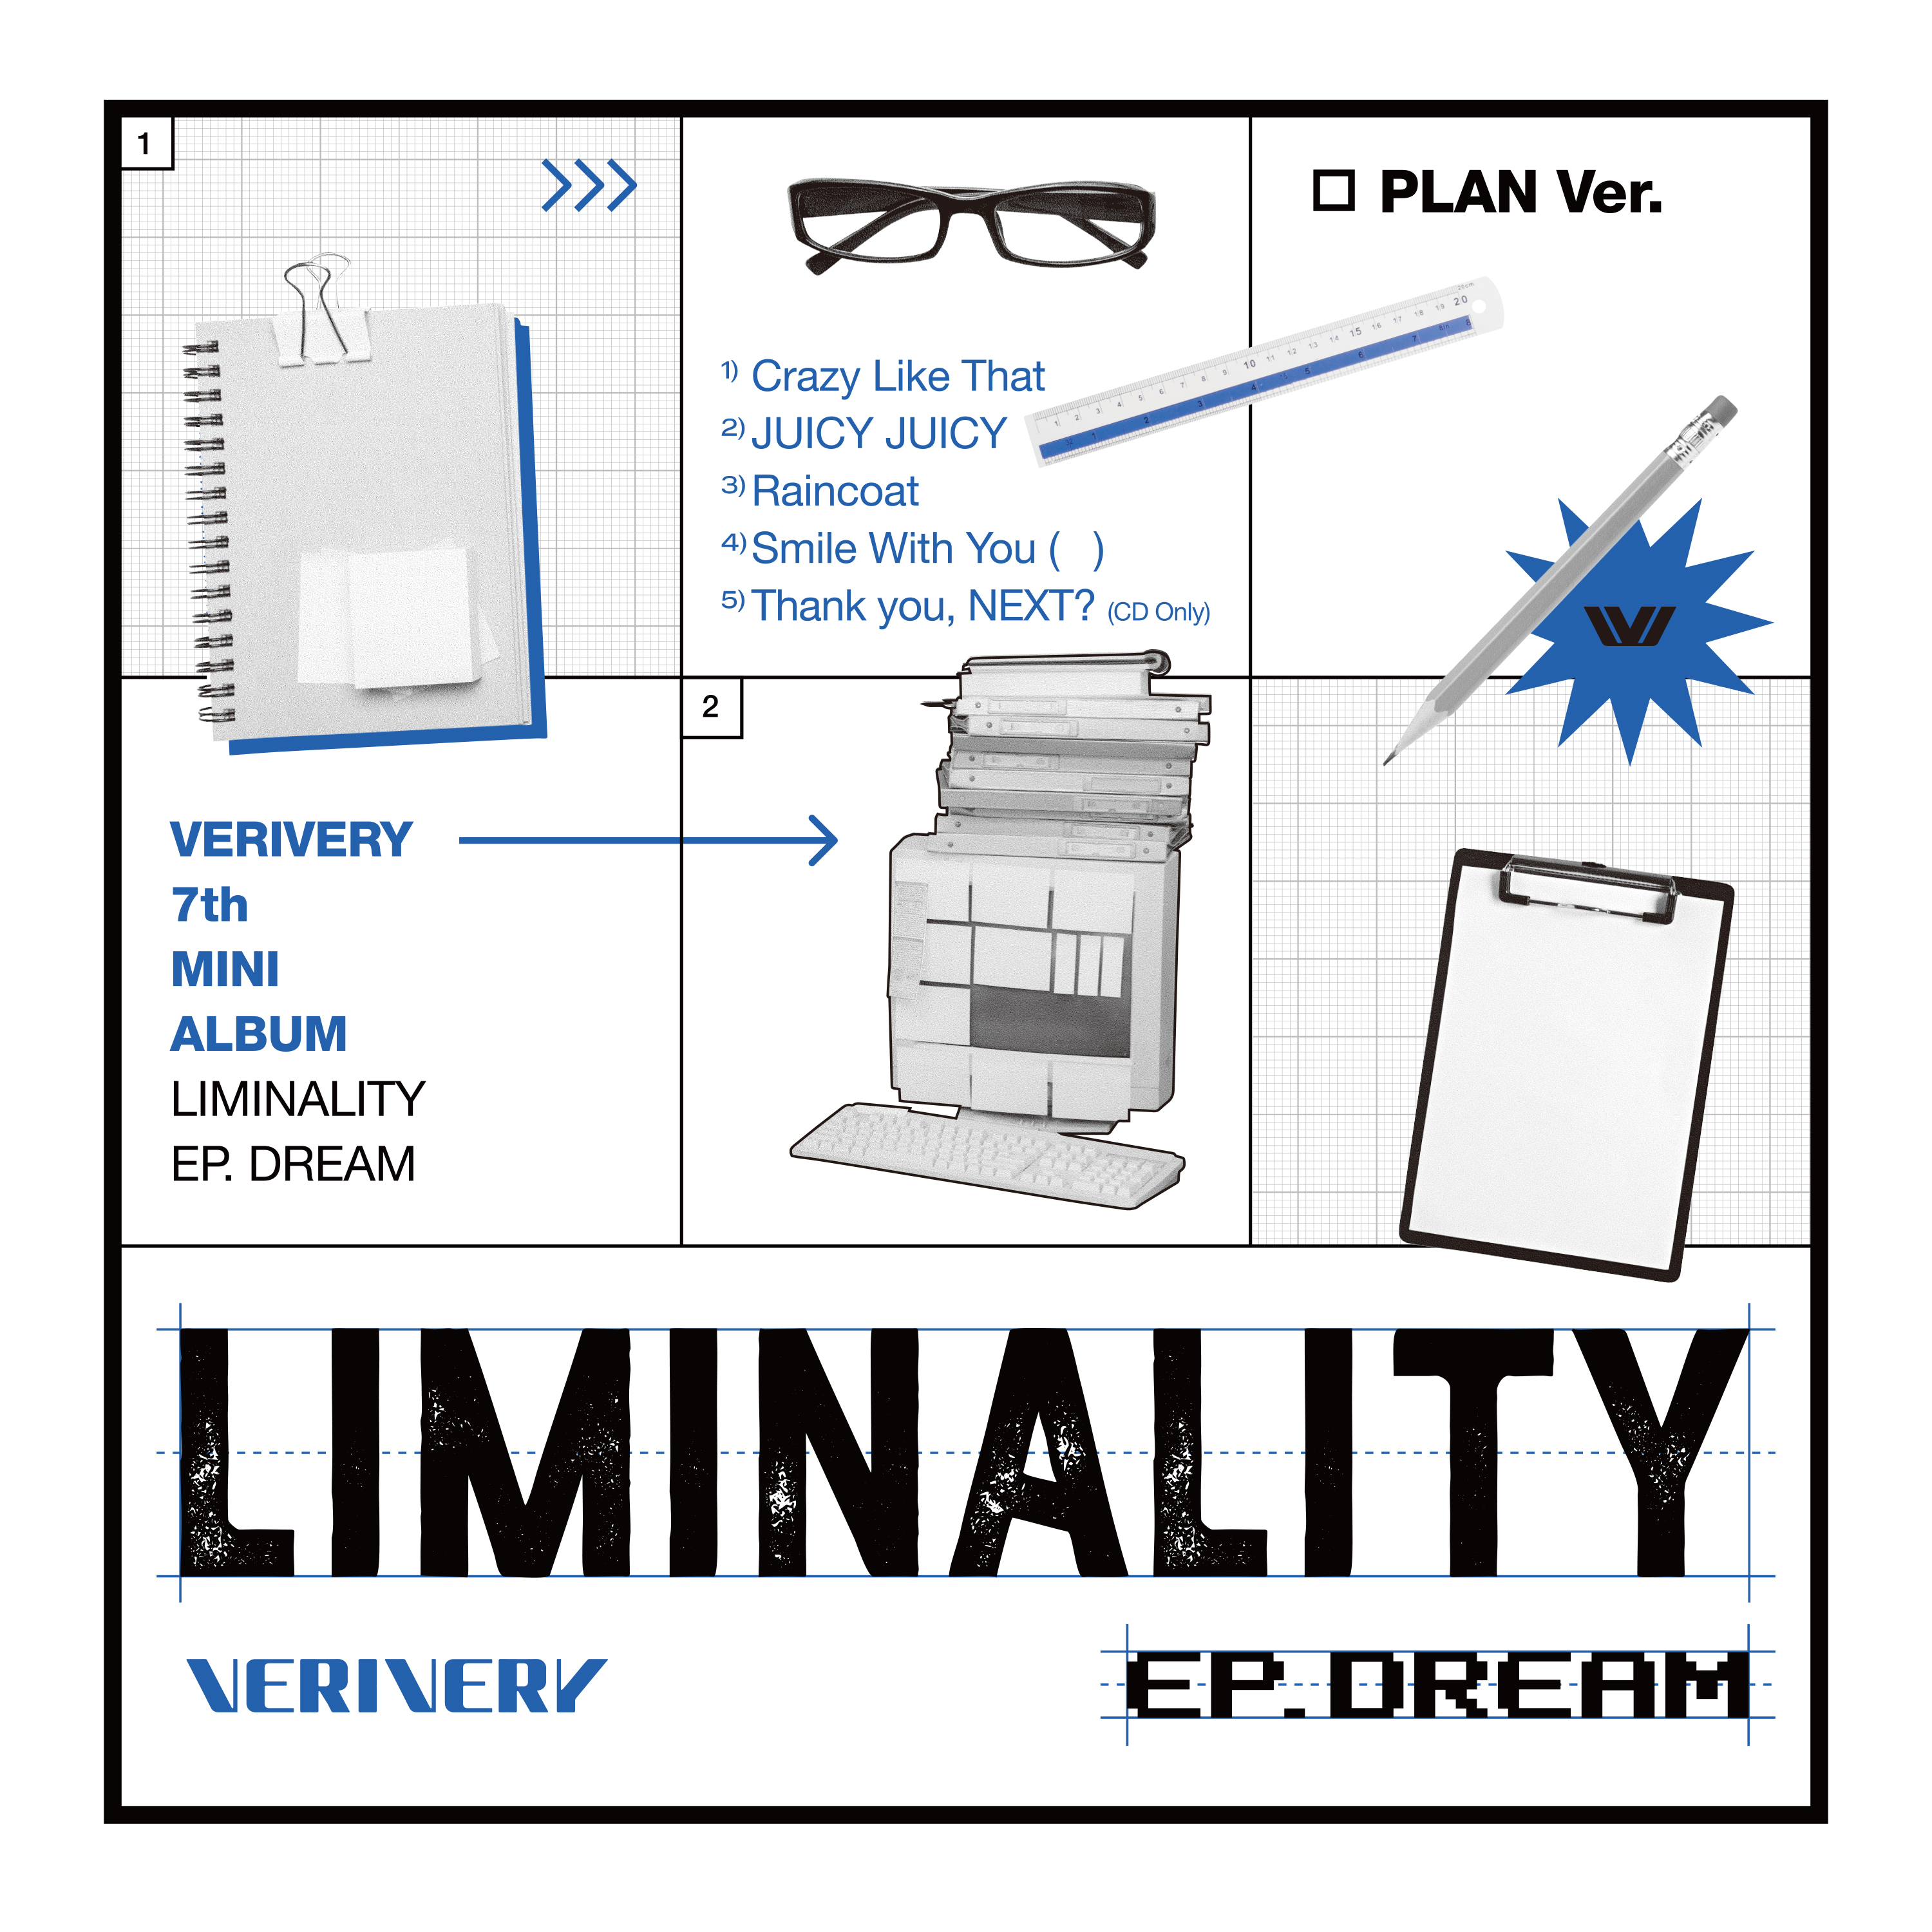 VERIVERY  - 7th Mini Album [Liminality - EP.DREAM] (PLAN Ver.)